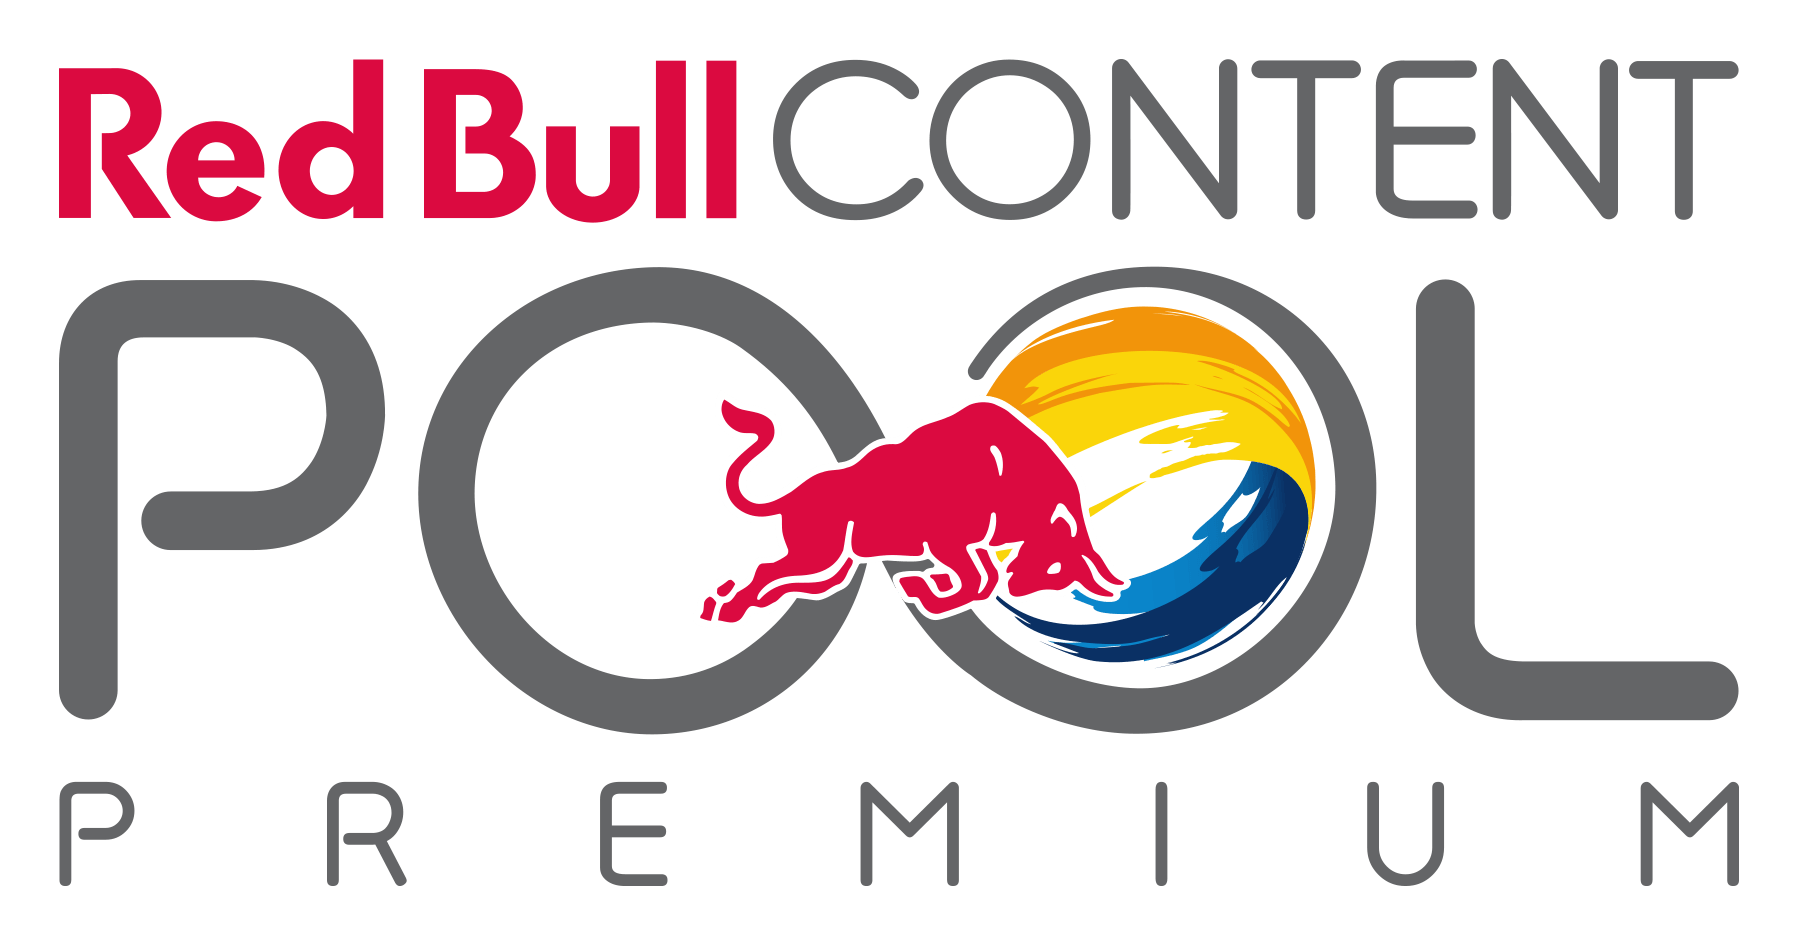 Red Media Logo - Multi-platform media company | Red Bull Media House